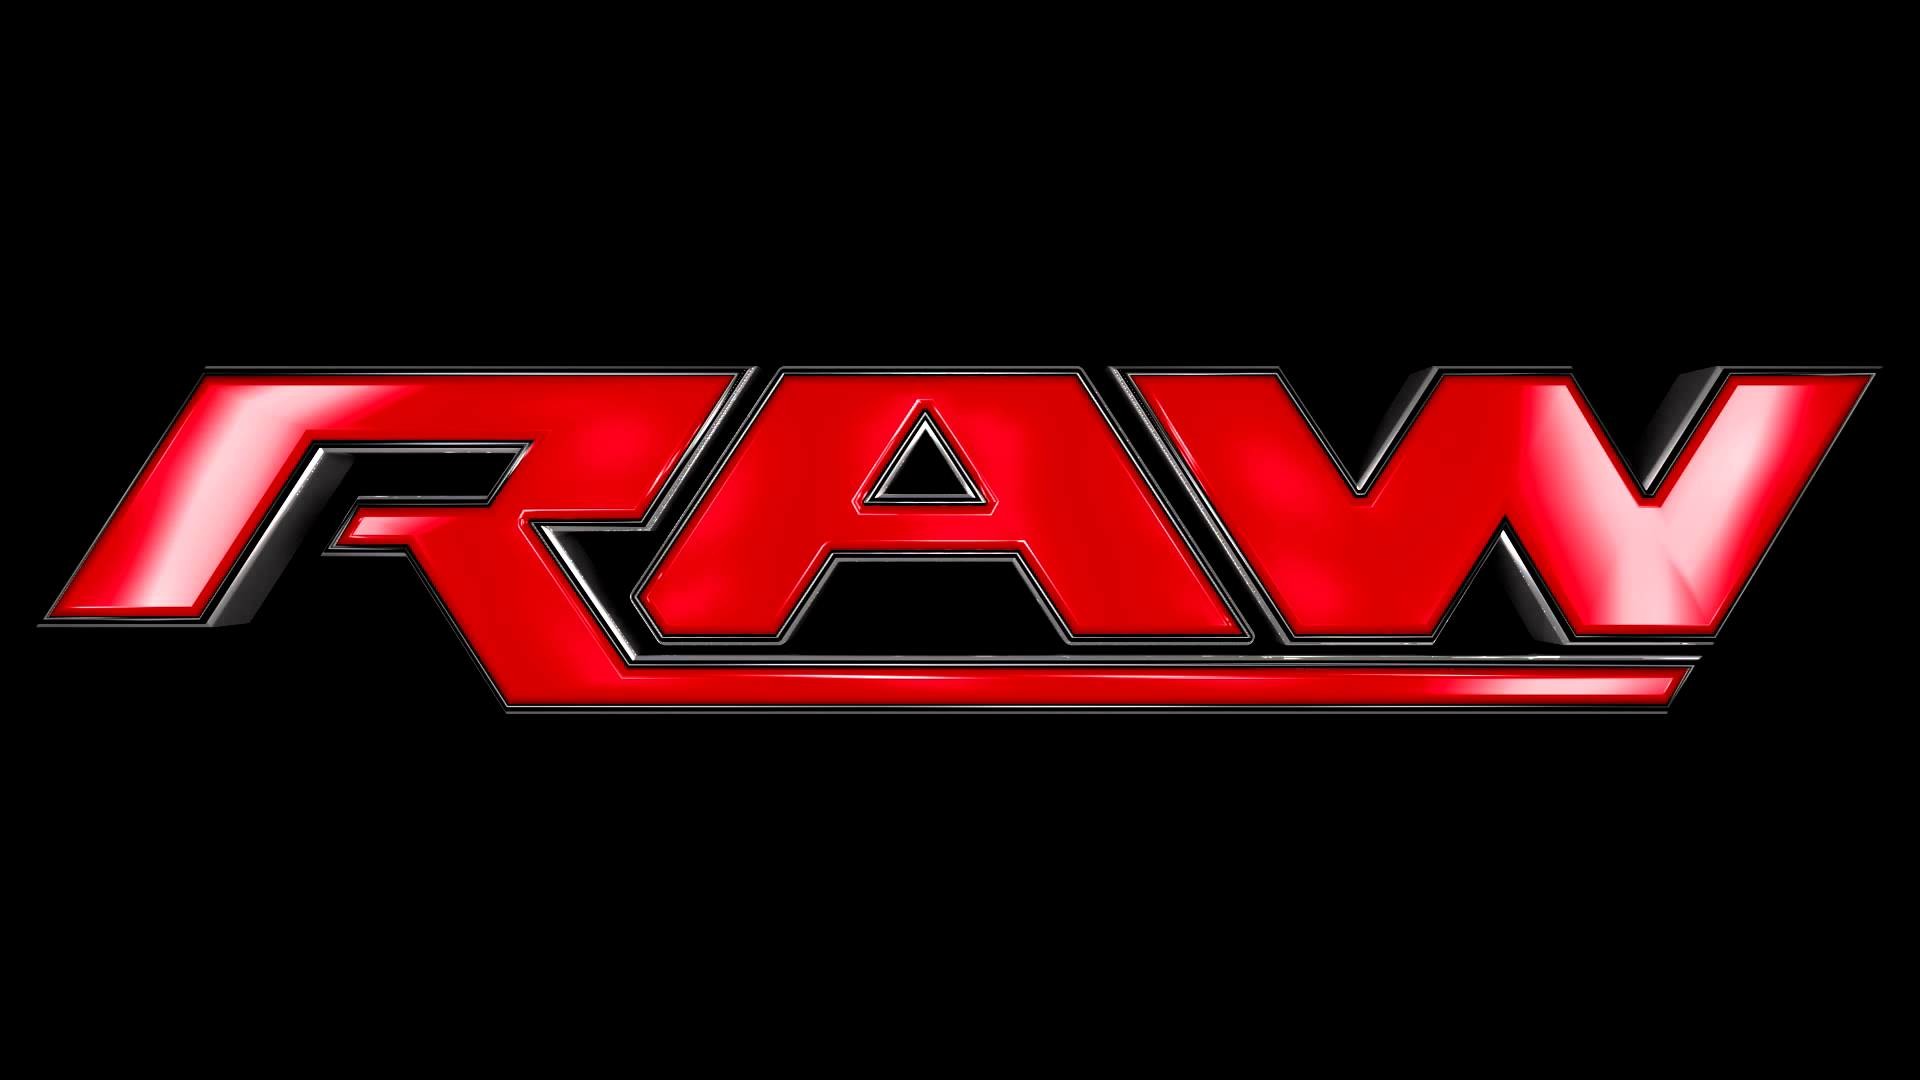 1920x1080 WWE RAW Results (09/04) - Braun Strowman Vs. Big Show In A Steel Cage  Match! - ProWrestling.com